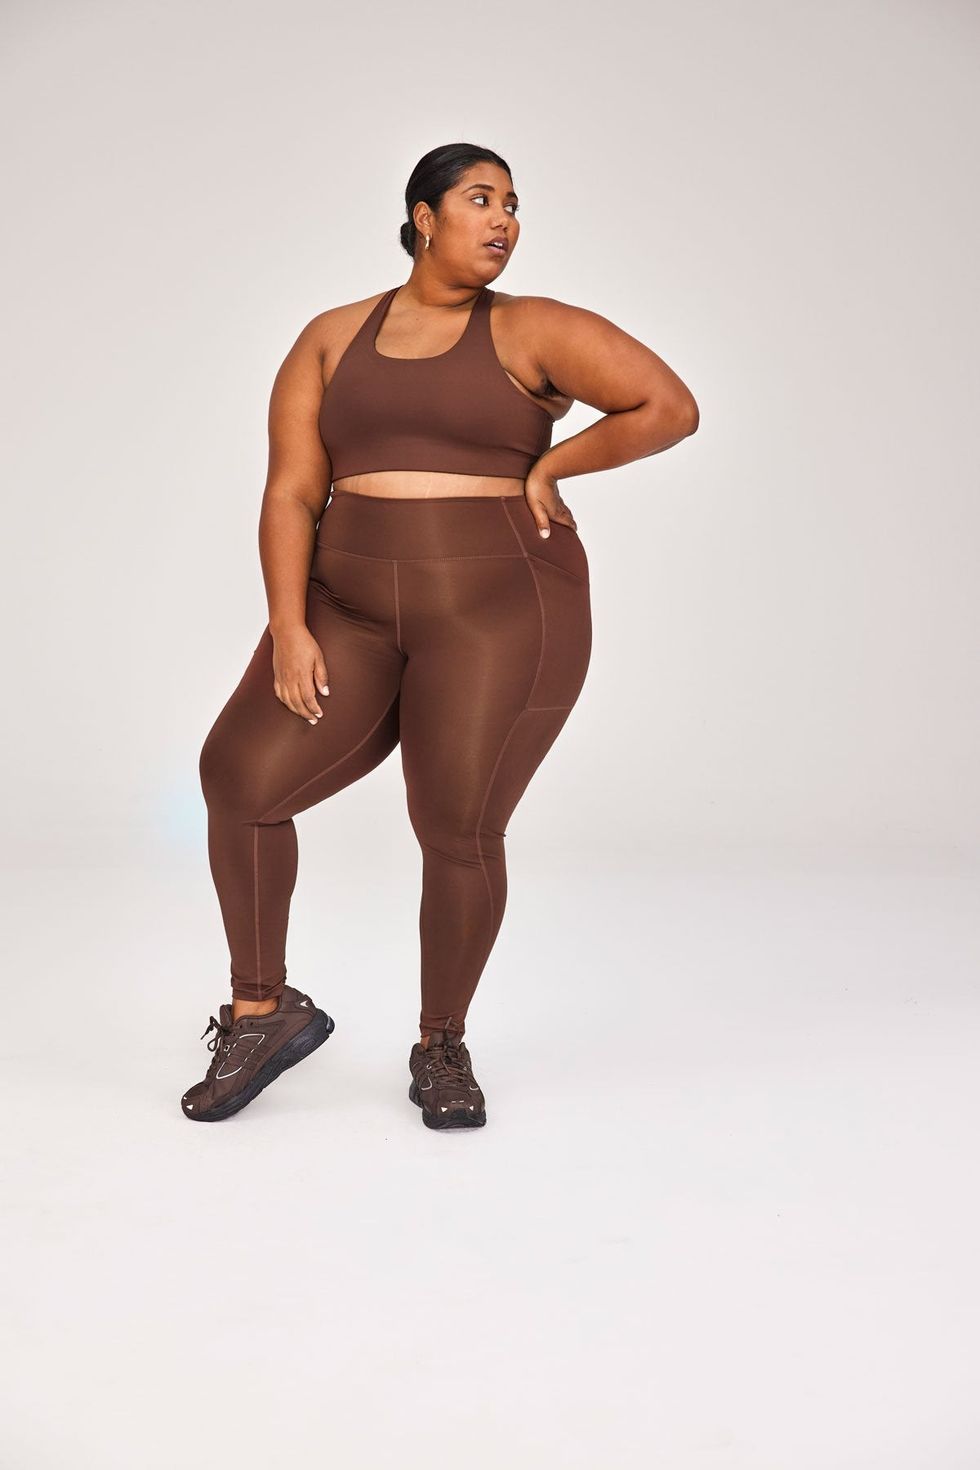 Buy YOHOYOHA Plus Size Leggings High Waist Athletic Workout Yoga Pants  Pockets Women's Tummy Control Best Thick Long XL 2X 3X 4X Black at